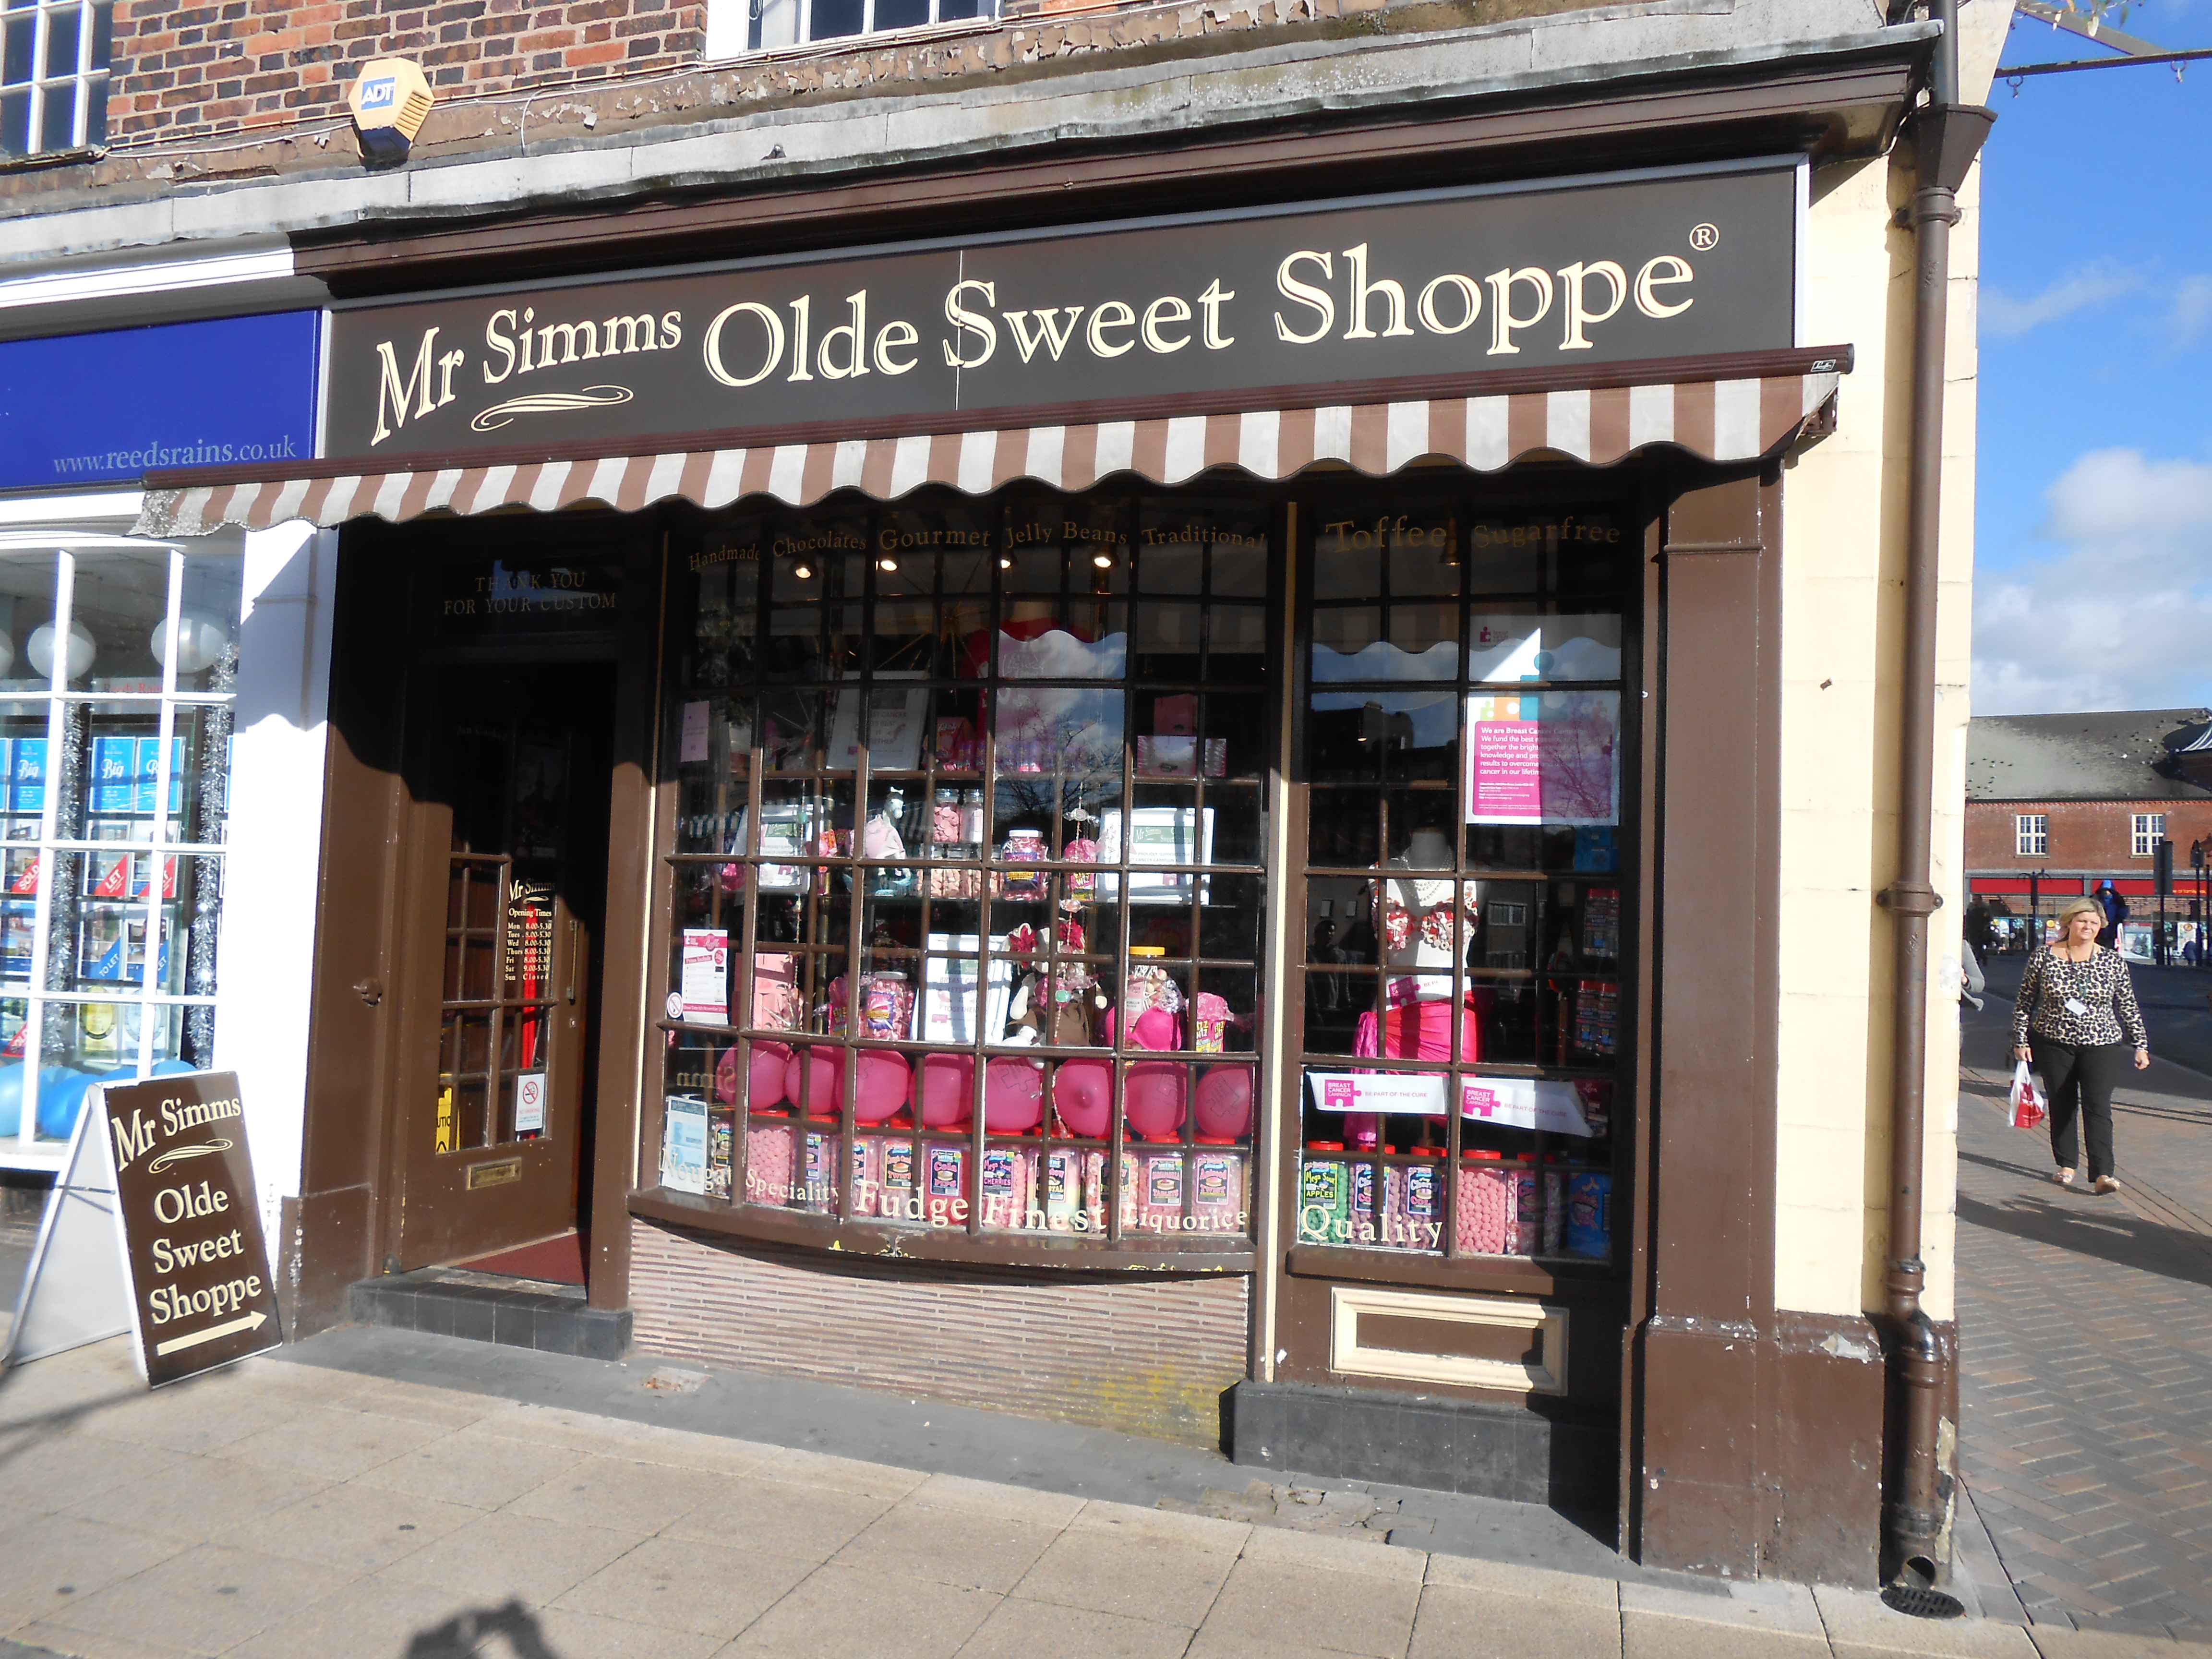 File:Mr Simms Olde Sweet Shoppe, Newcastle-under-Lyme.jpg